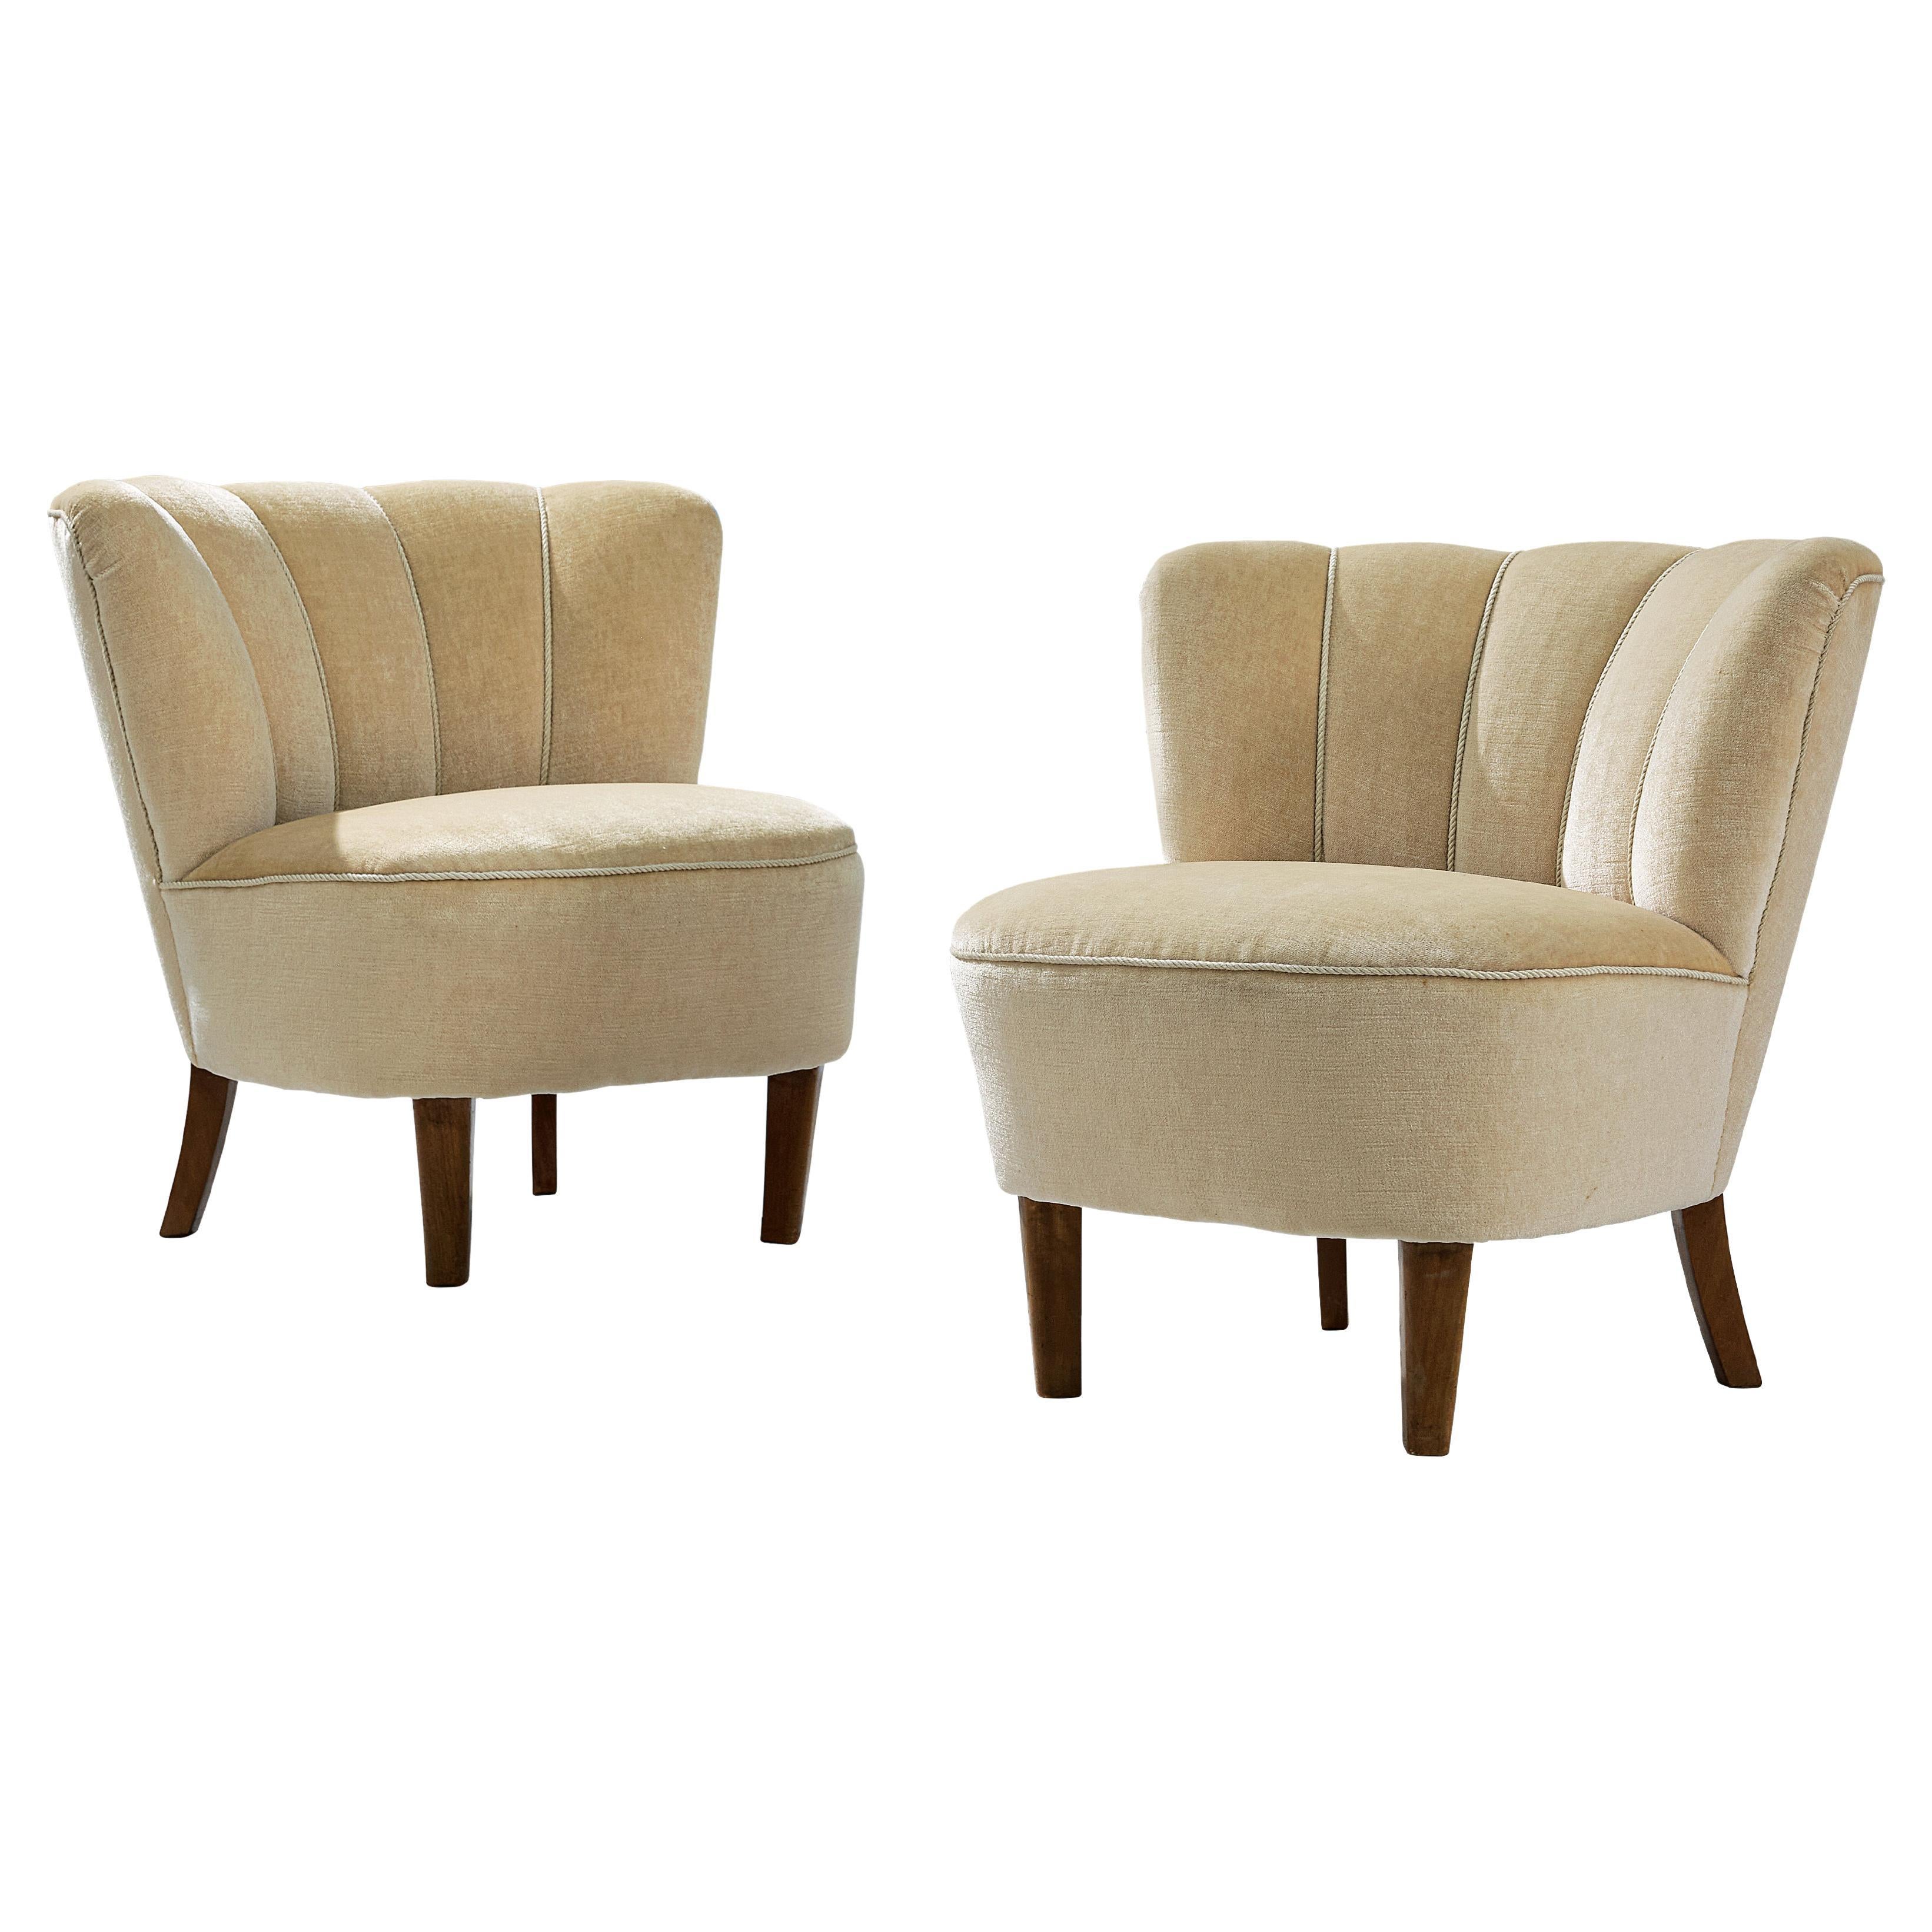 Pair of Art Deco Lounge Chairs in Beige Velvet Upholstery